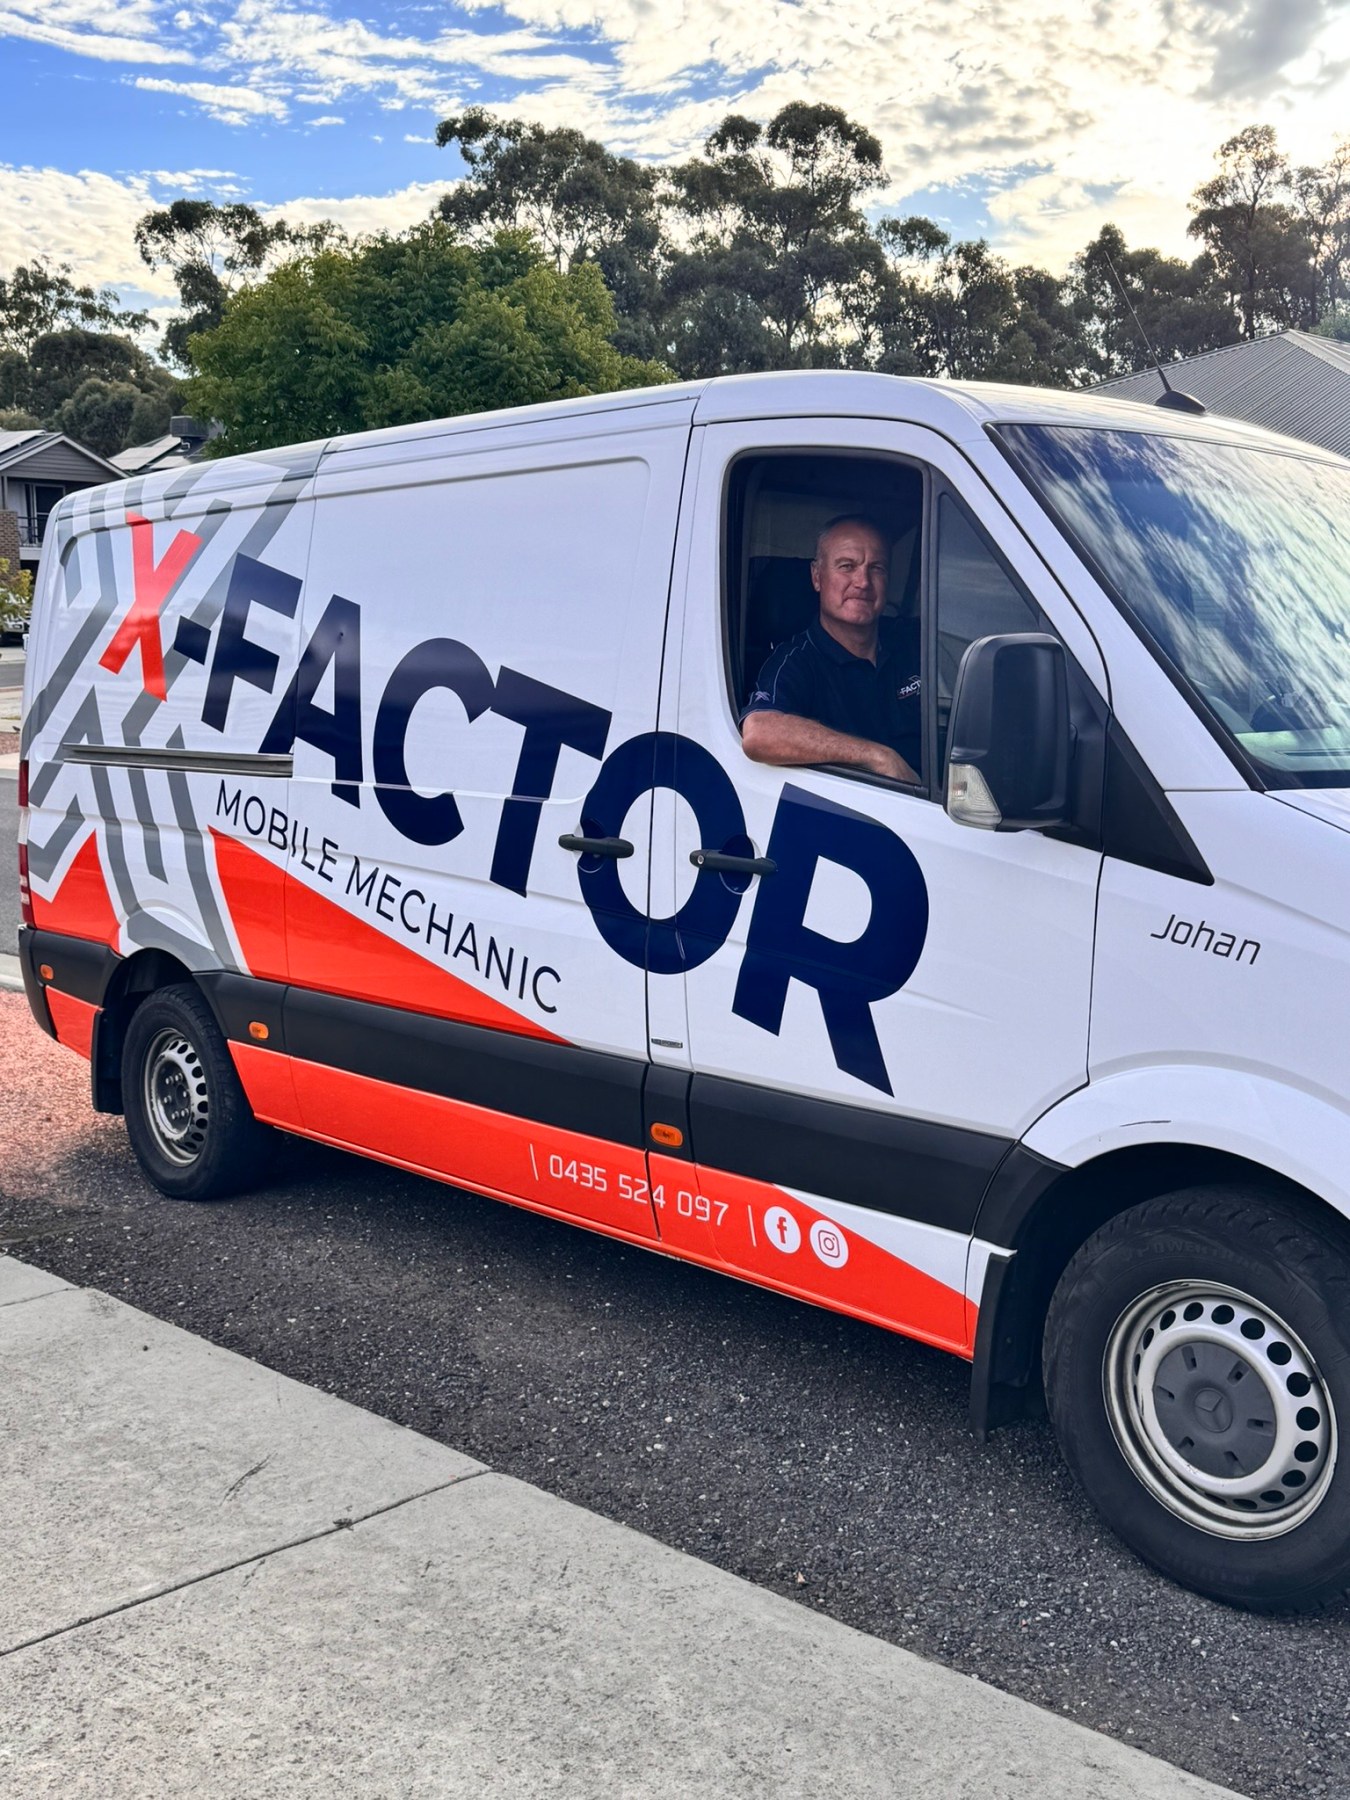 X-Factor Mobile Mechanic